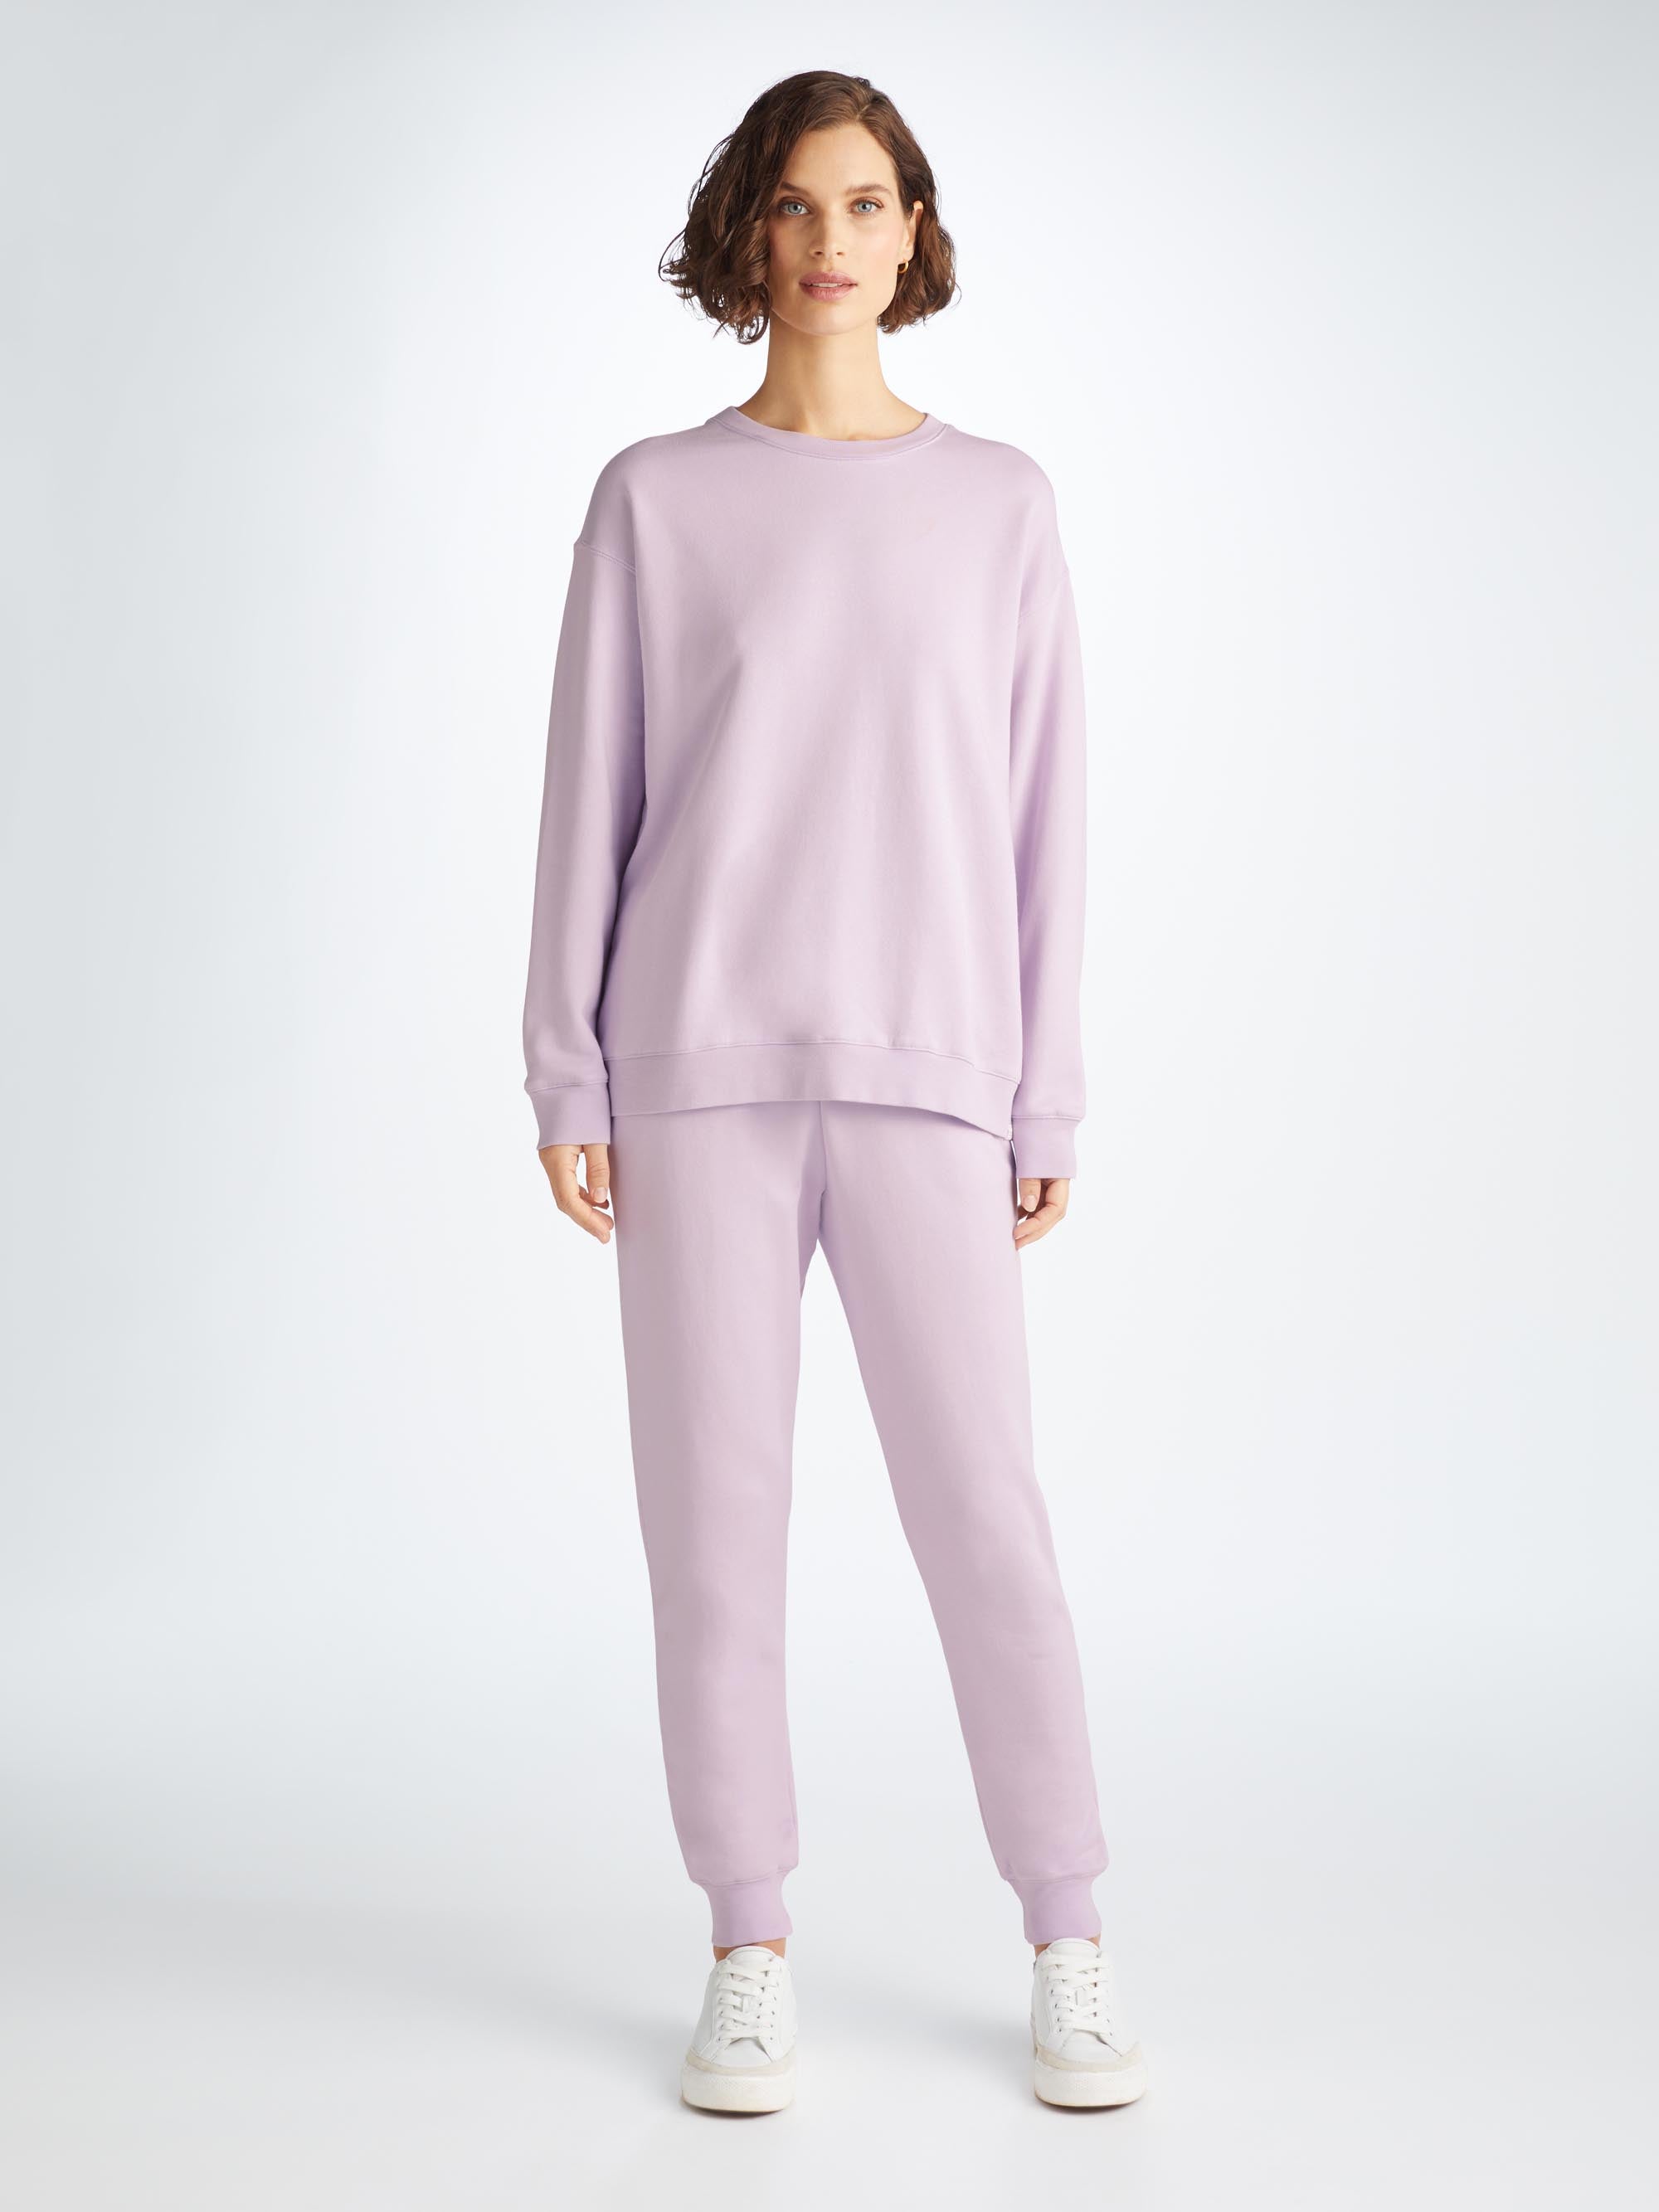 Shop Derek Rose Women's Sweatpants Quinn Cotton Modal Lilac